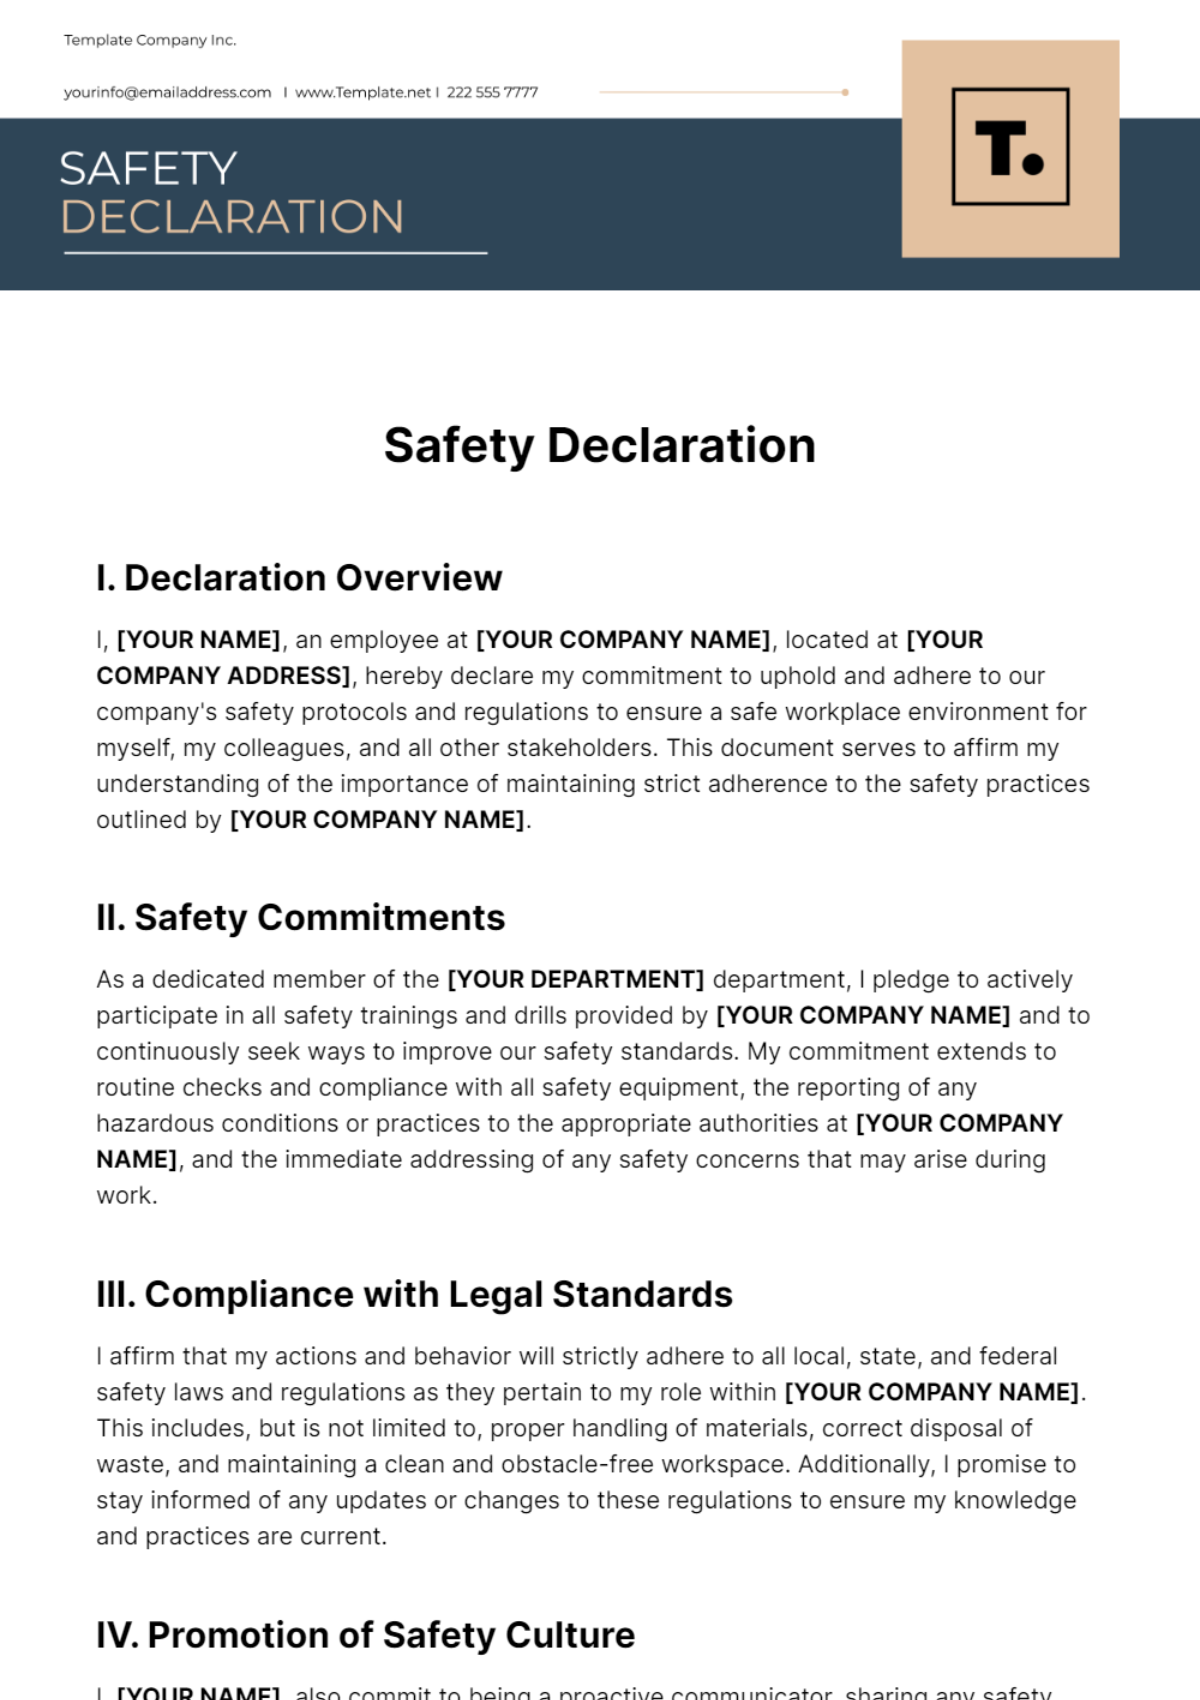 Safety Declaration Template